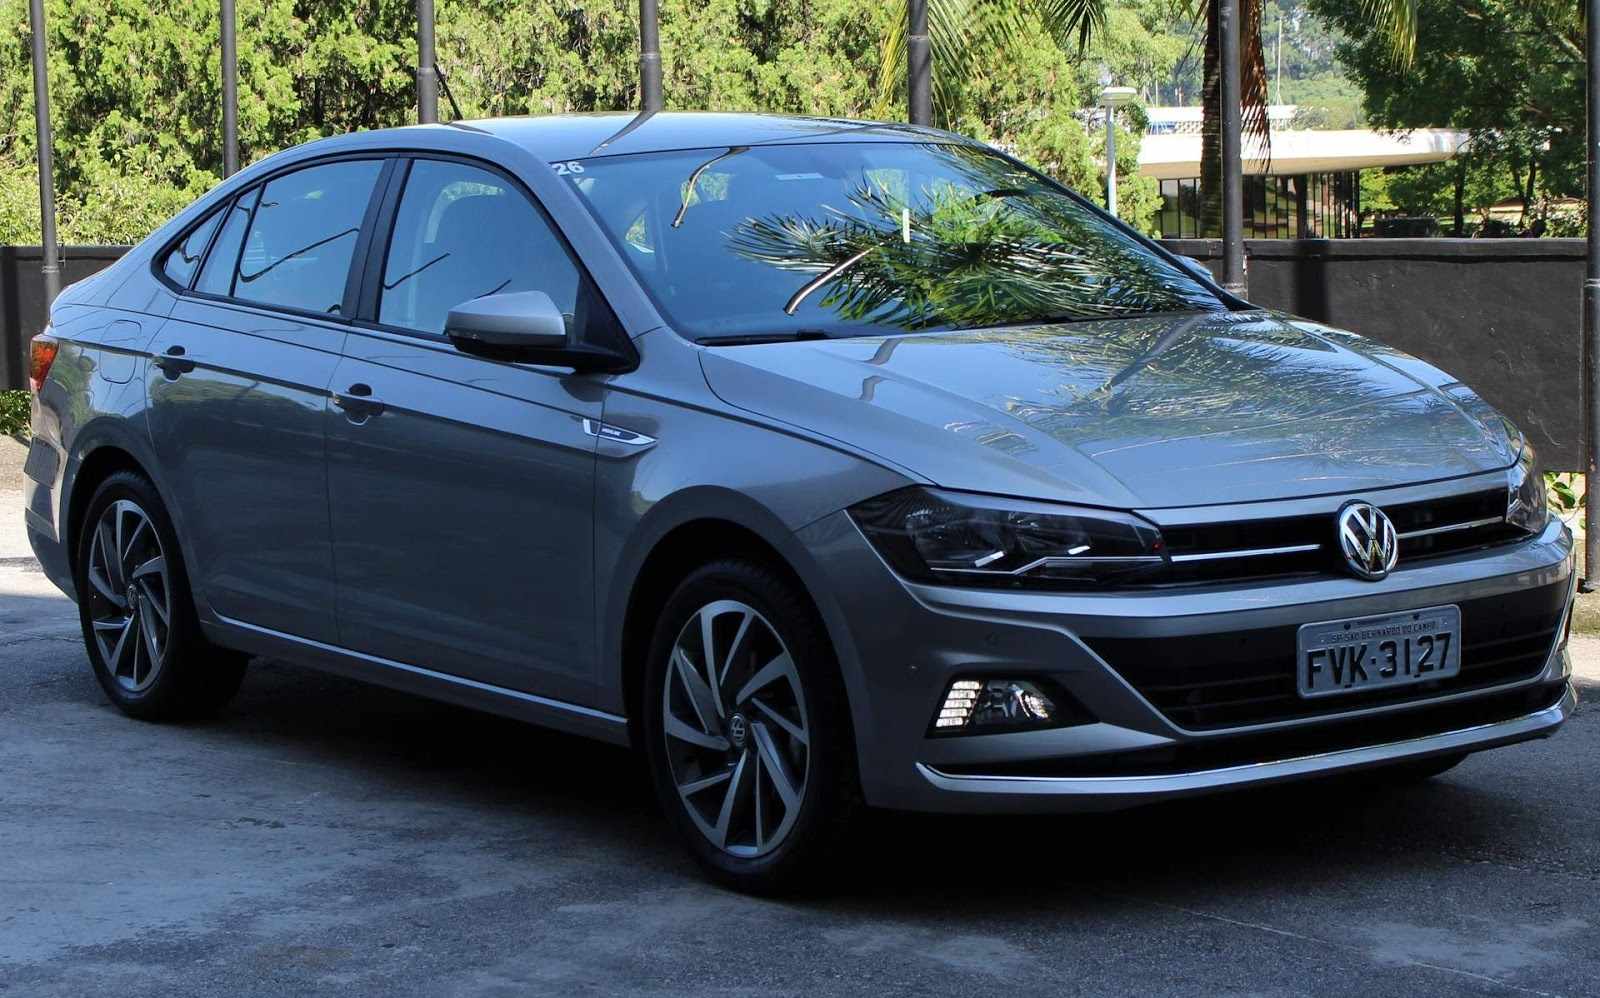 Volkswagen Virtus Matte Grey Edition Takes the Road